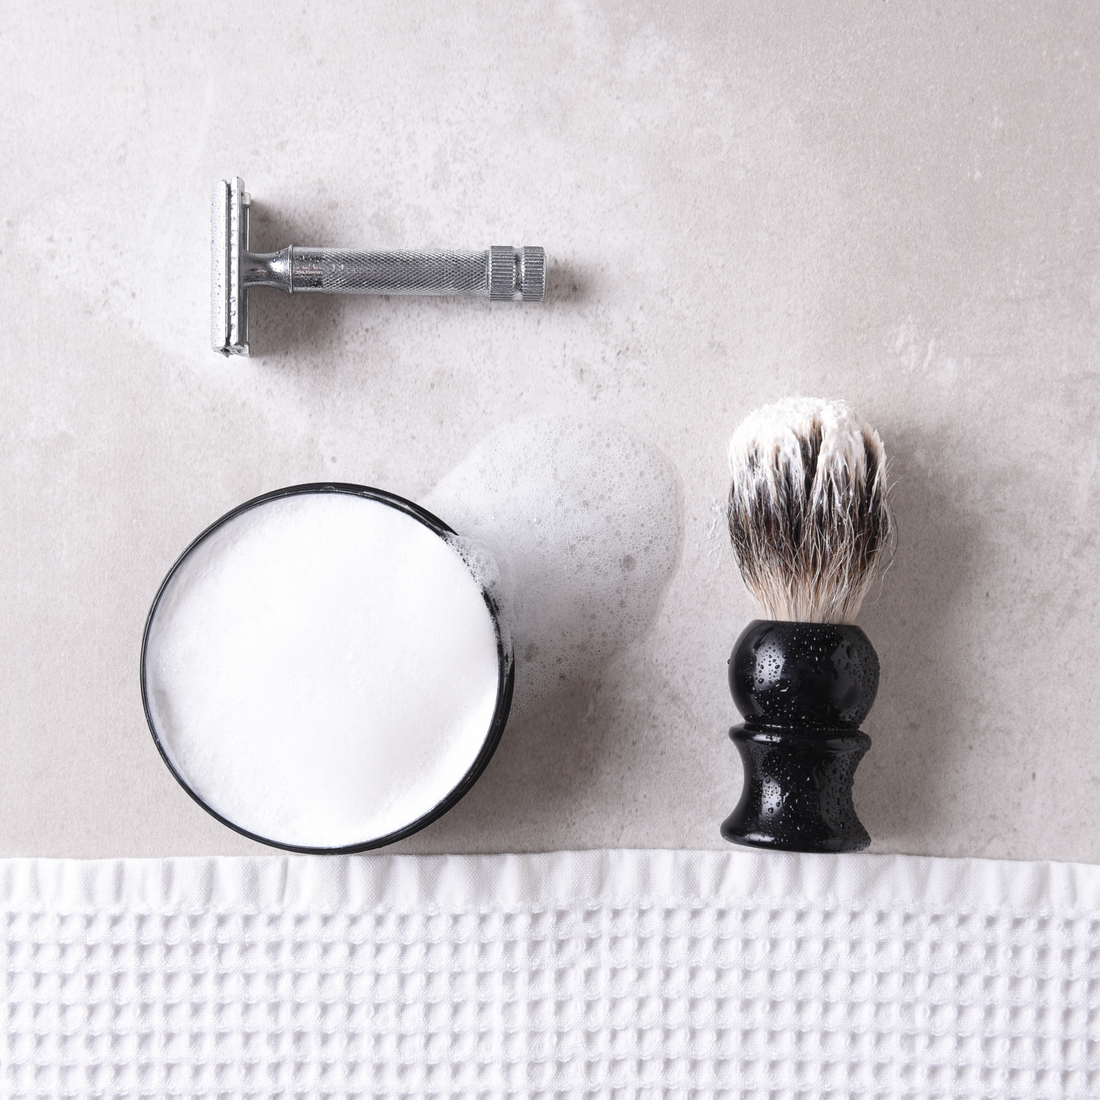 safety razor with shaving cream and brush